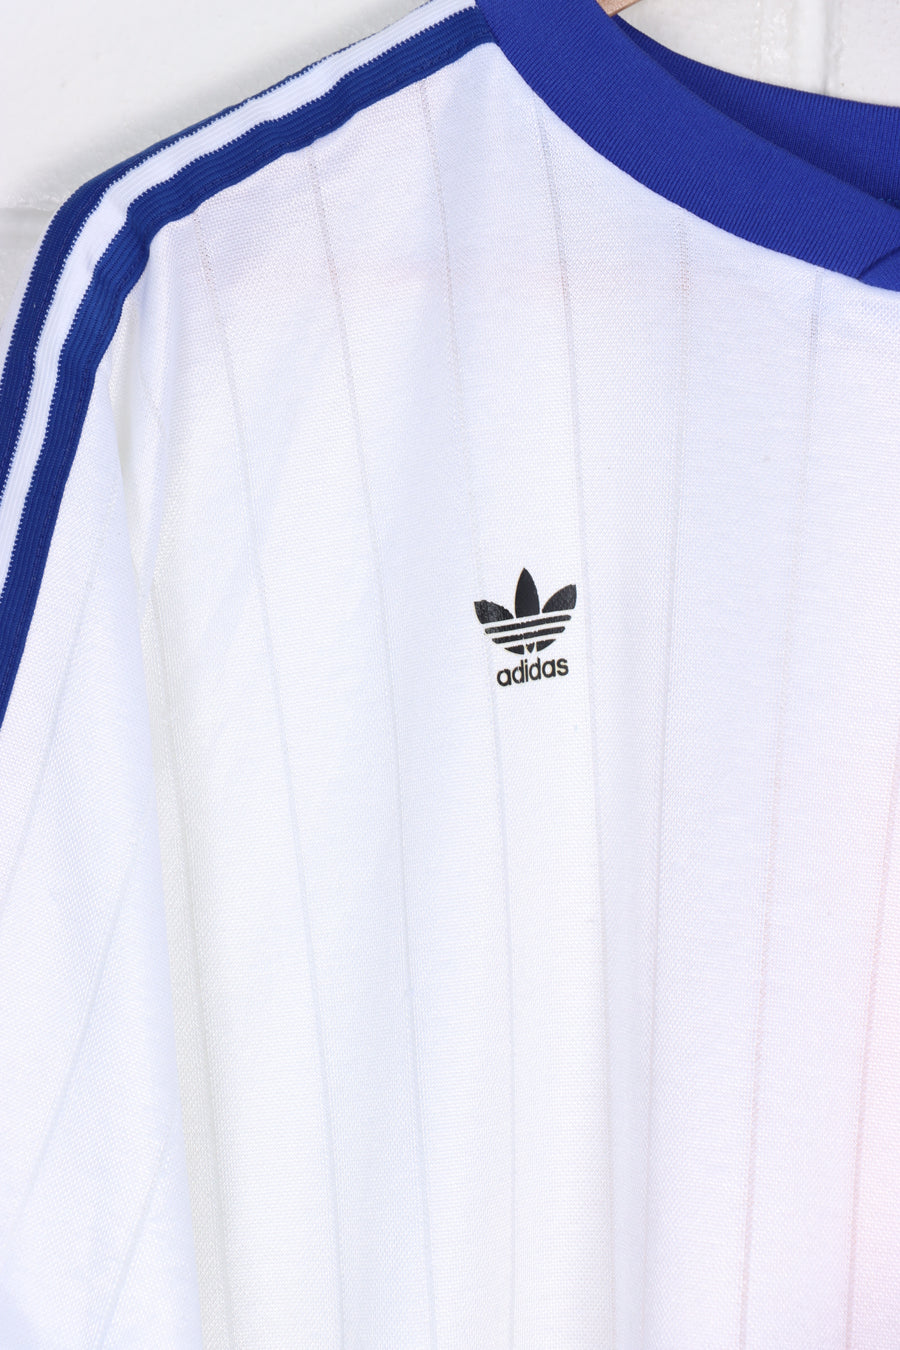 ADIDAS Blue & White 3-Stripe Soccer Jersey USA Made (XL)